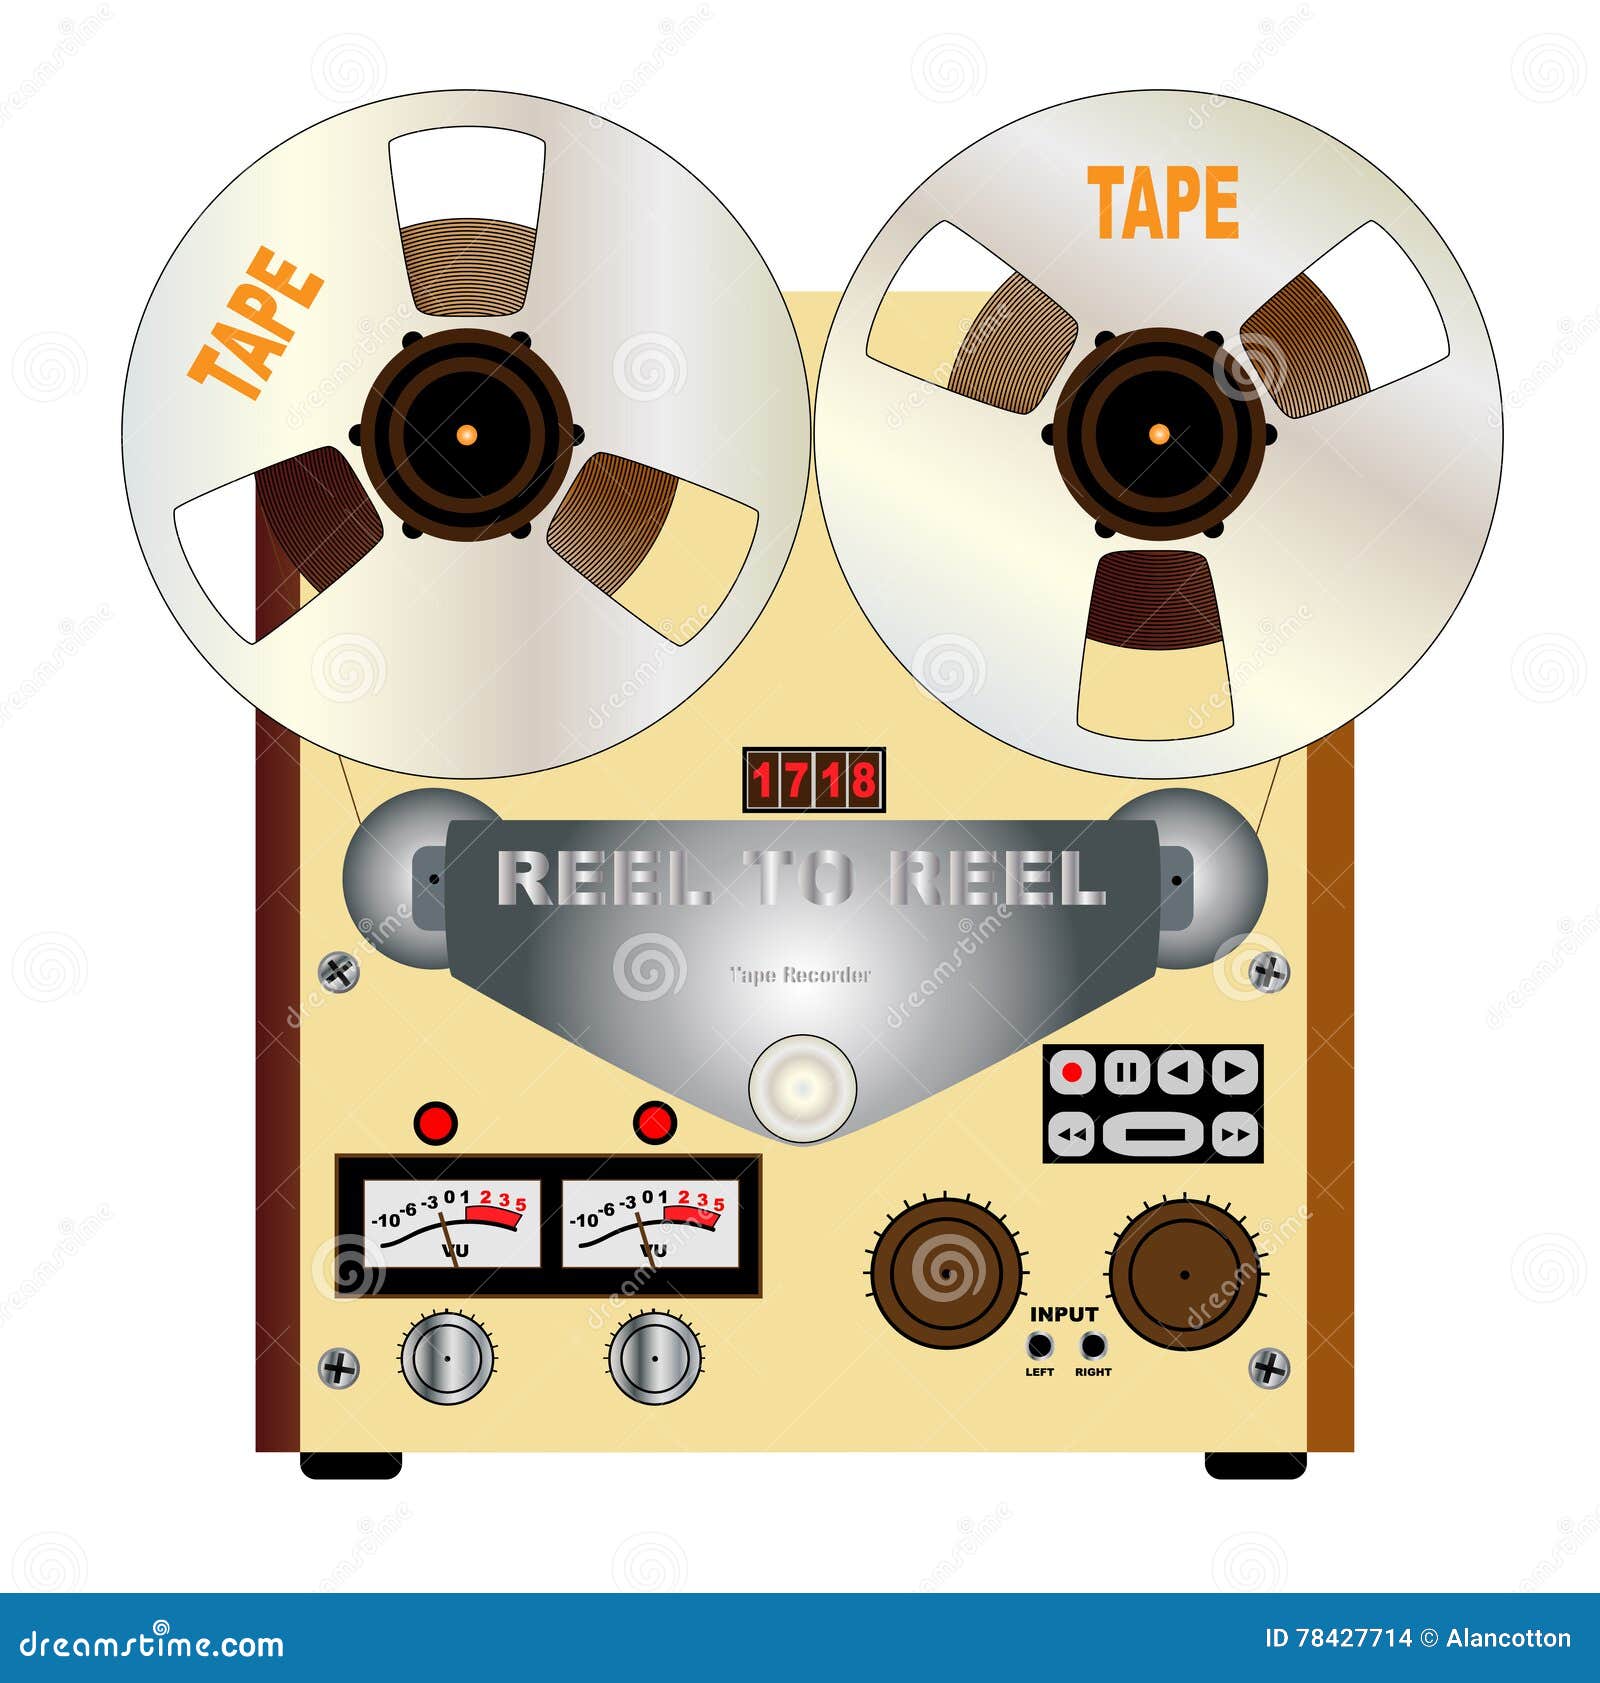 Reel To Reel Tape Machine Stock Illustrations – 56 Reel To Reel